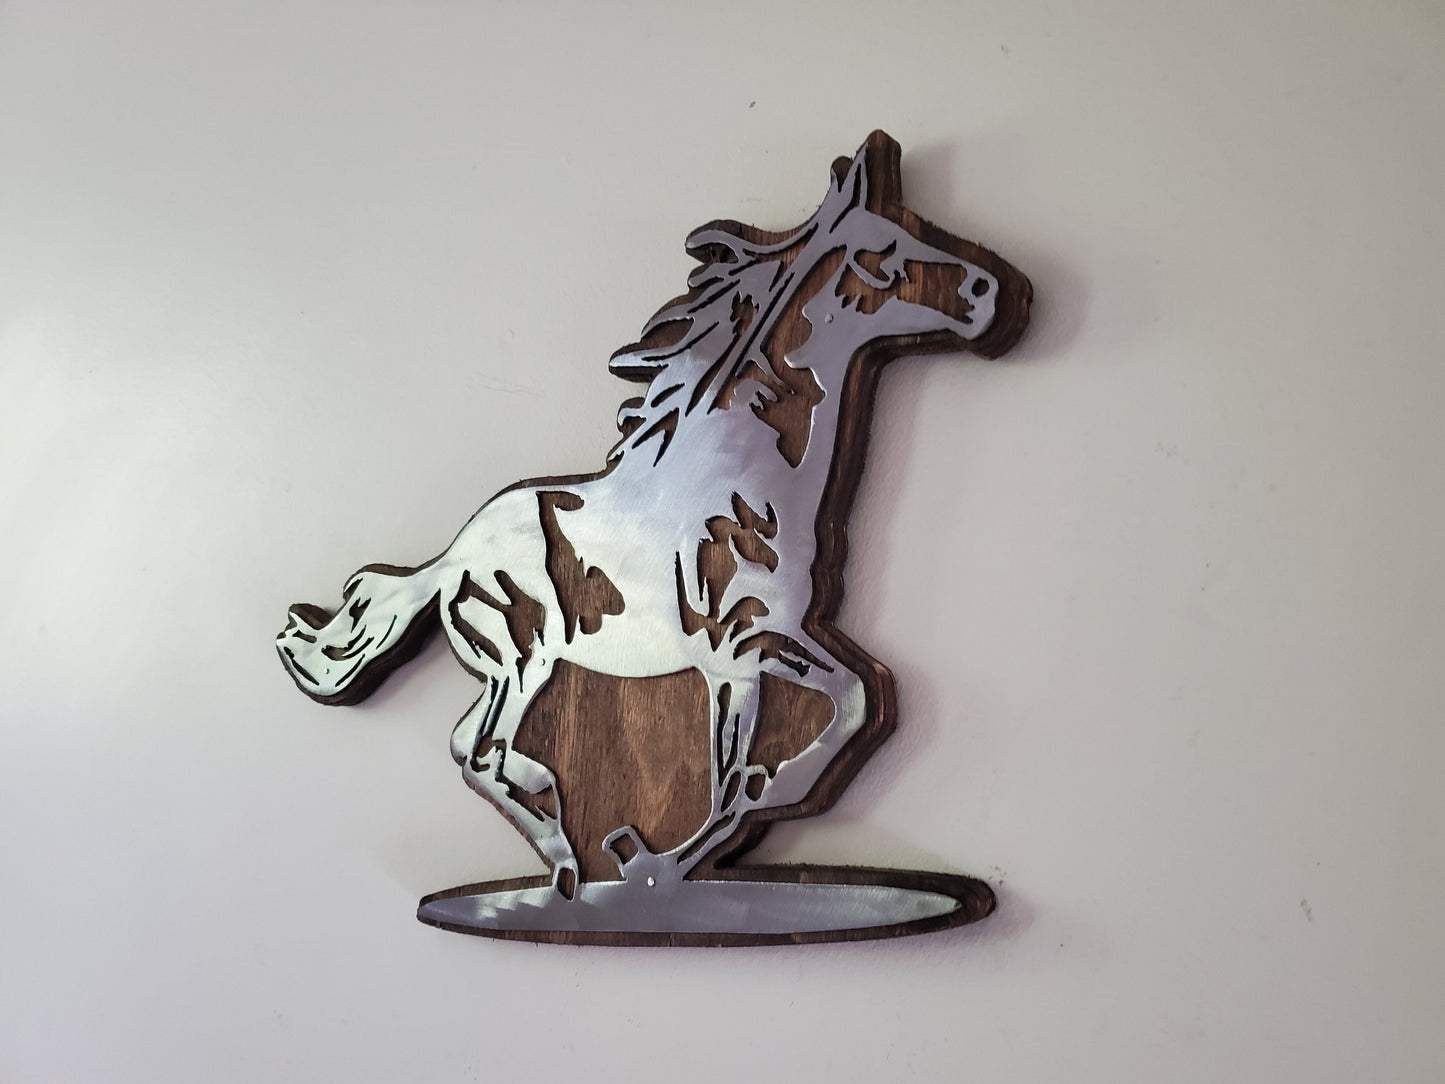 Running Horse Metal Art on Rustic Wood